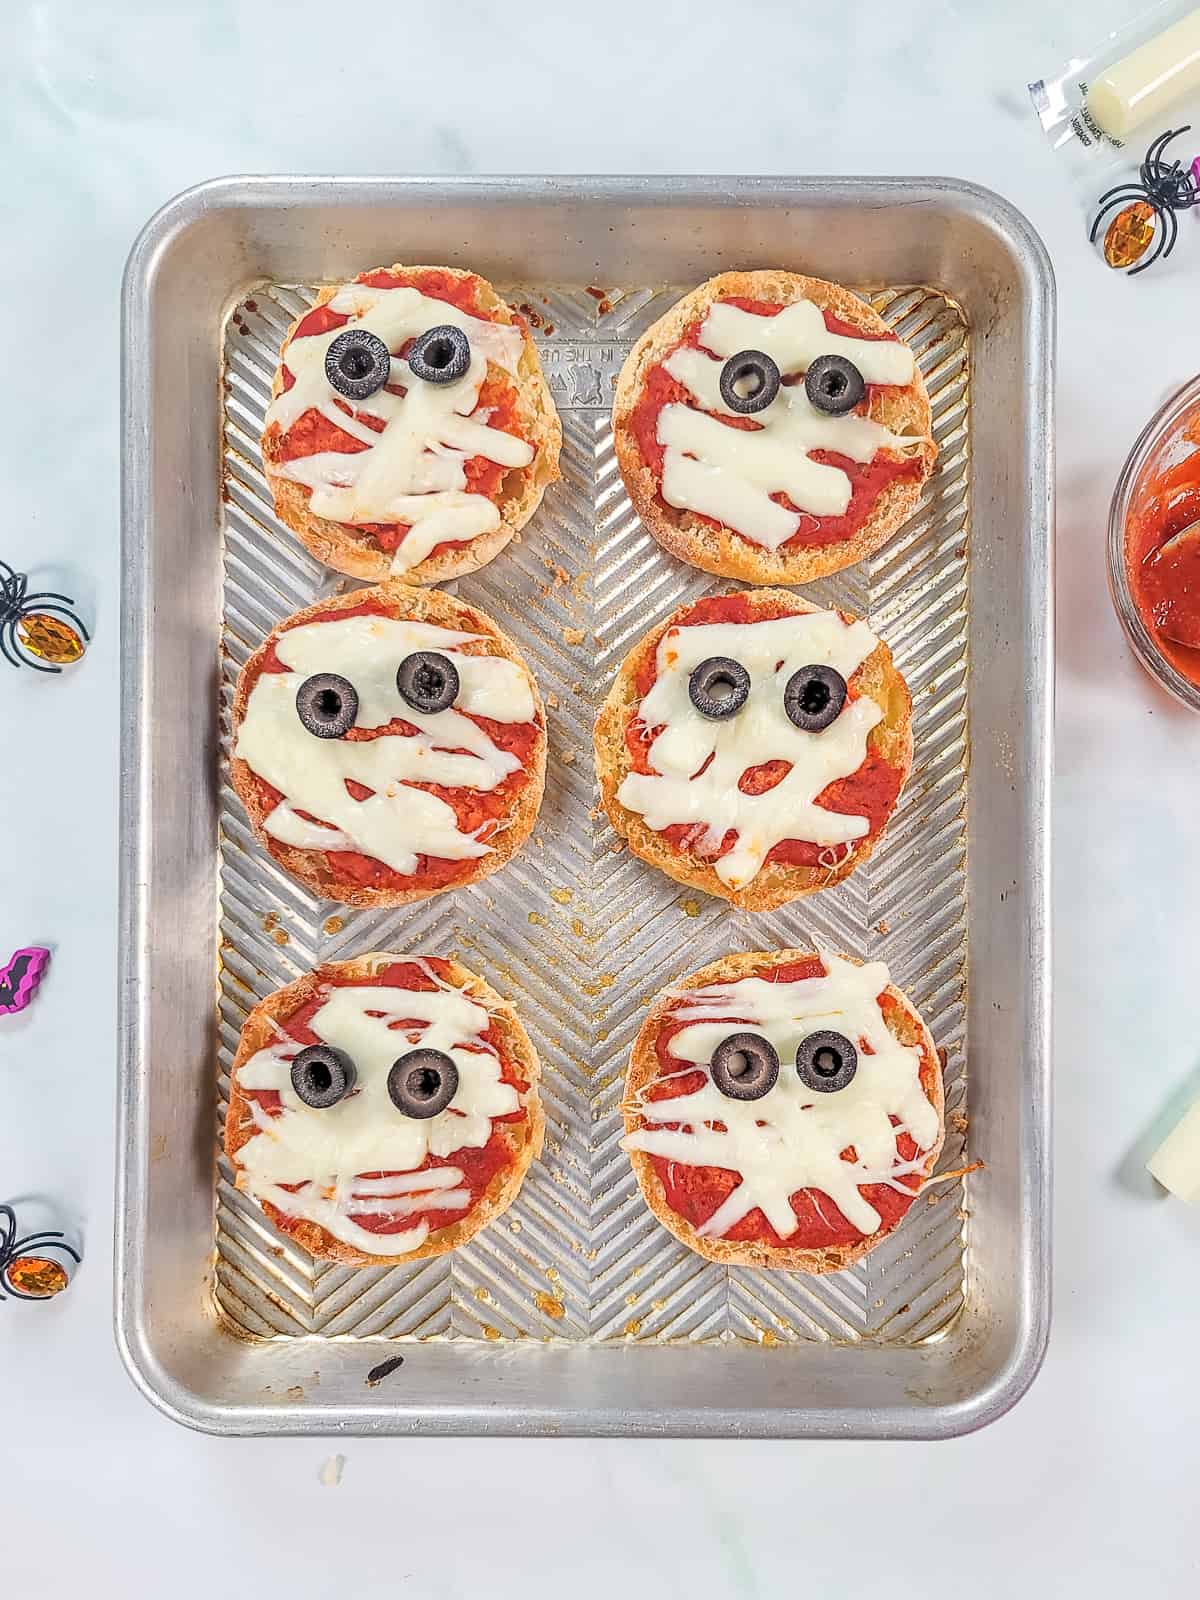 Mummy pizzas on baking sheet.